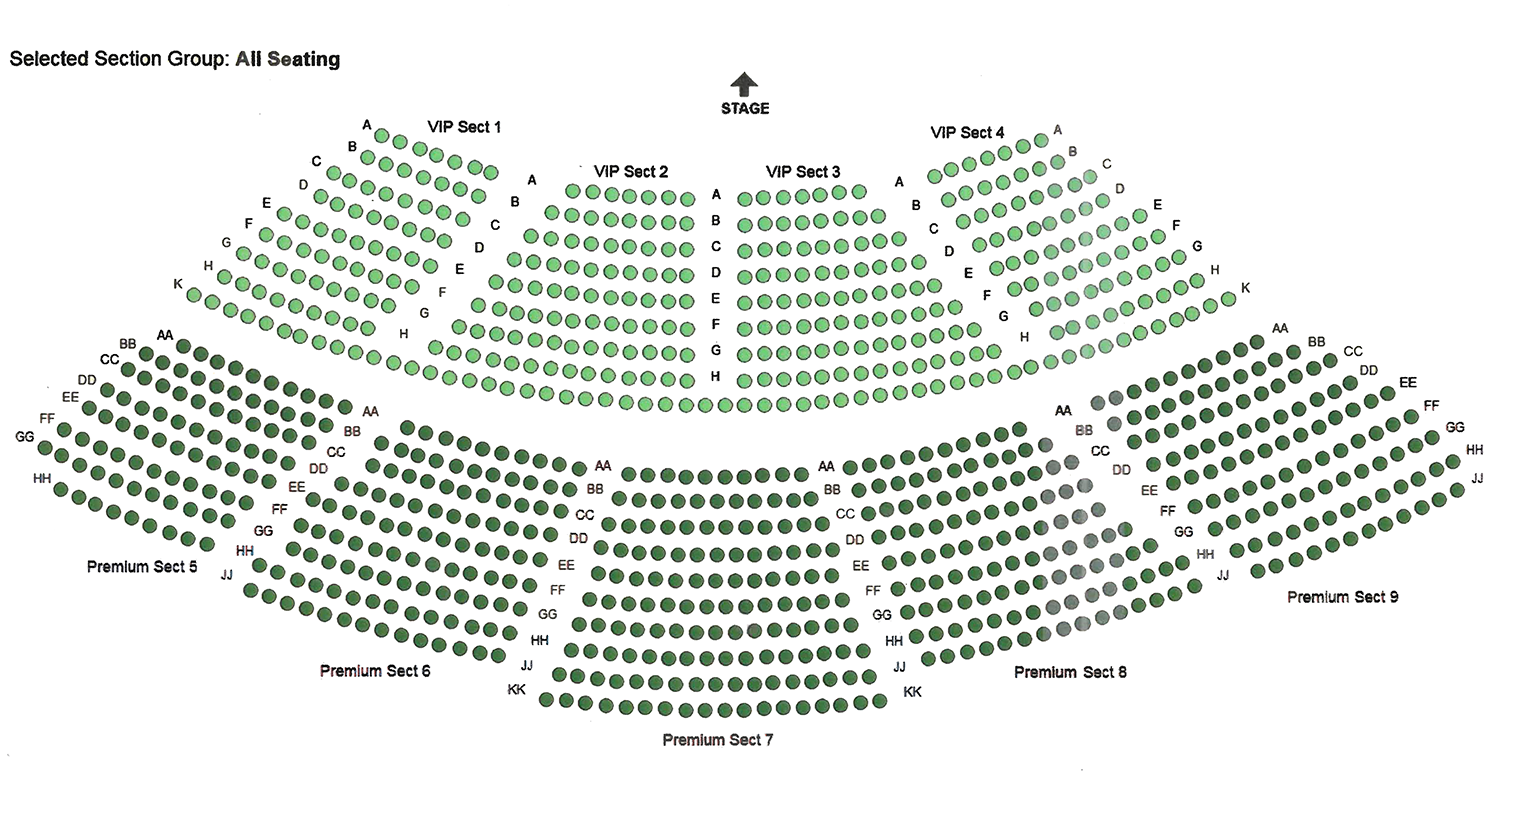 Toronto Pavilion Seating Chart